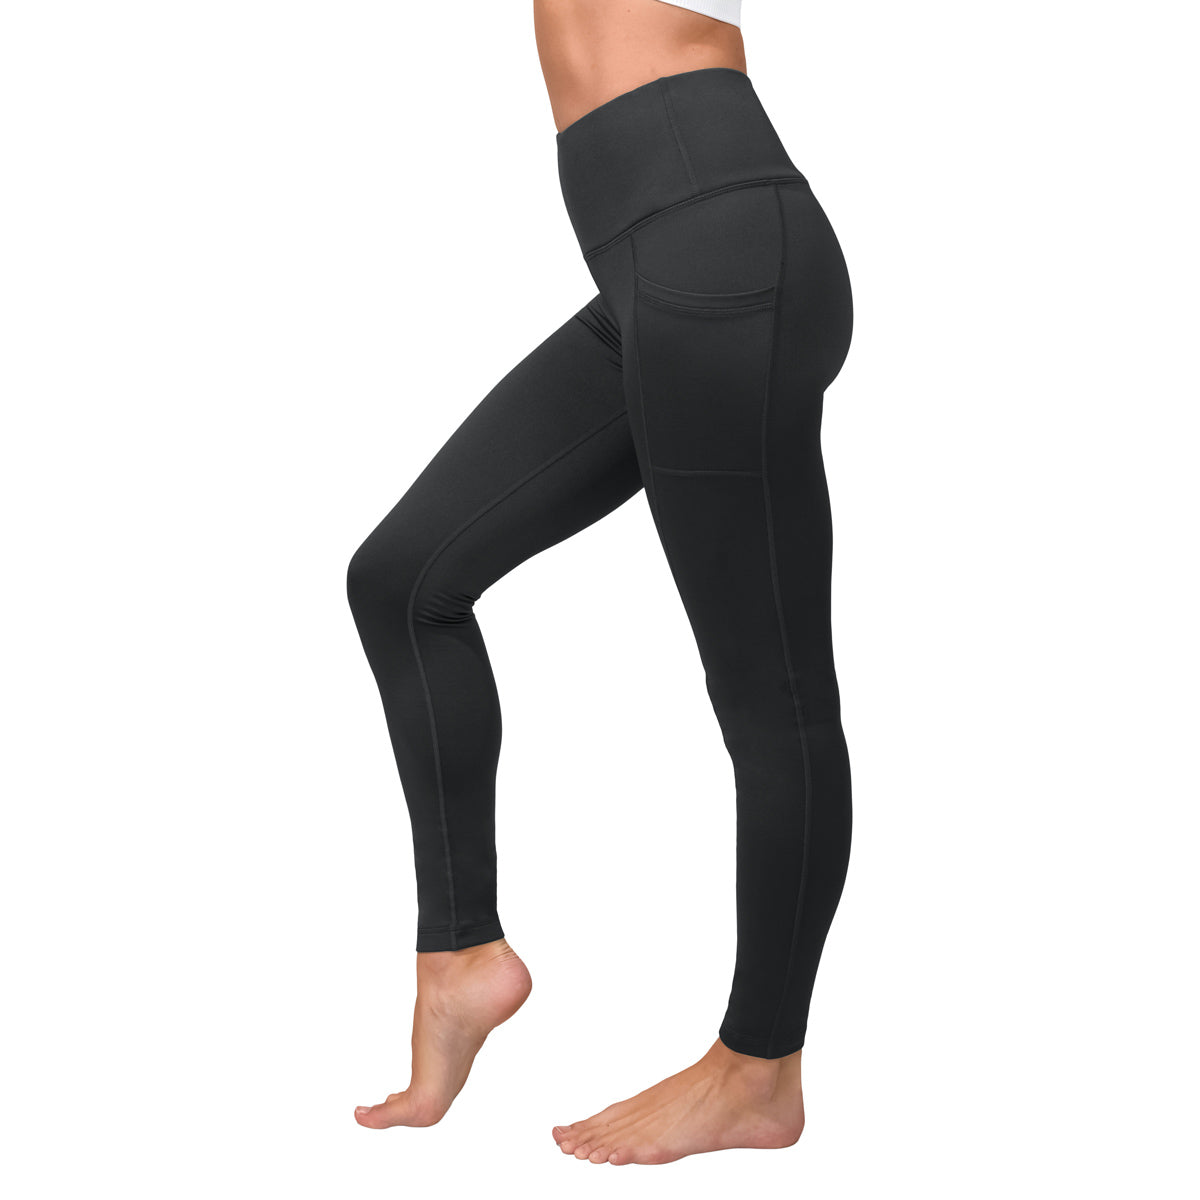 90 Degree By Reflex High Waist Fleece Lined Leggings with Side Pocket -  Yoga Pants - Stone Grey Space Dye - Medium in Dubai - UAE